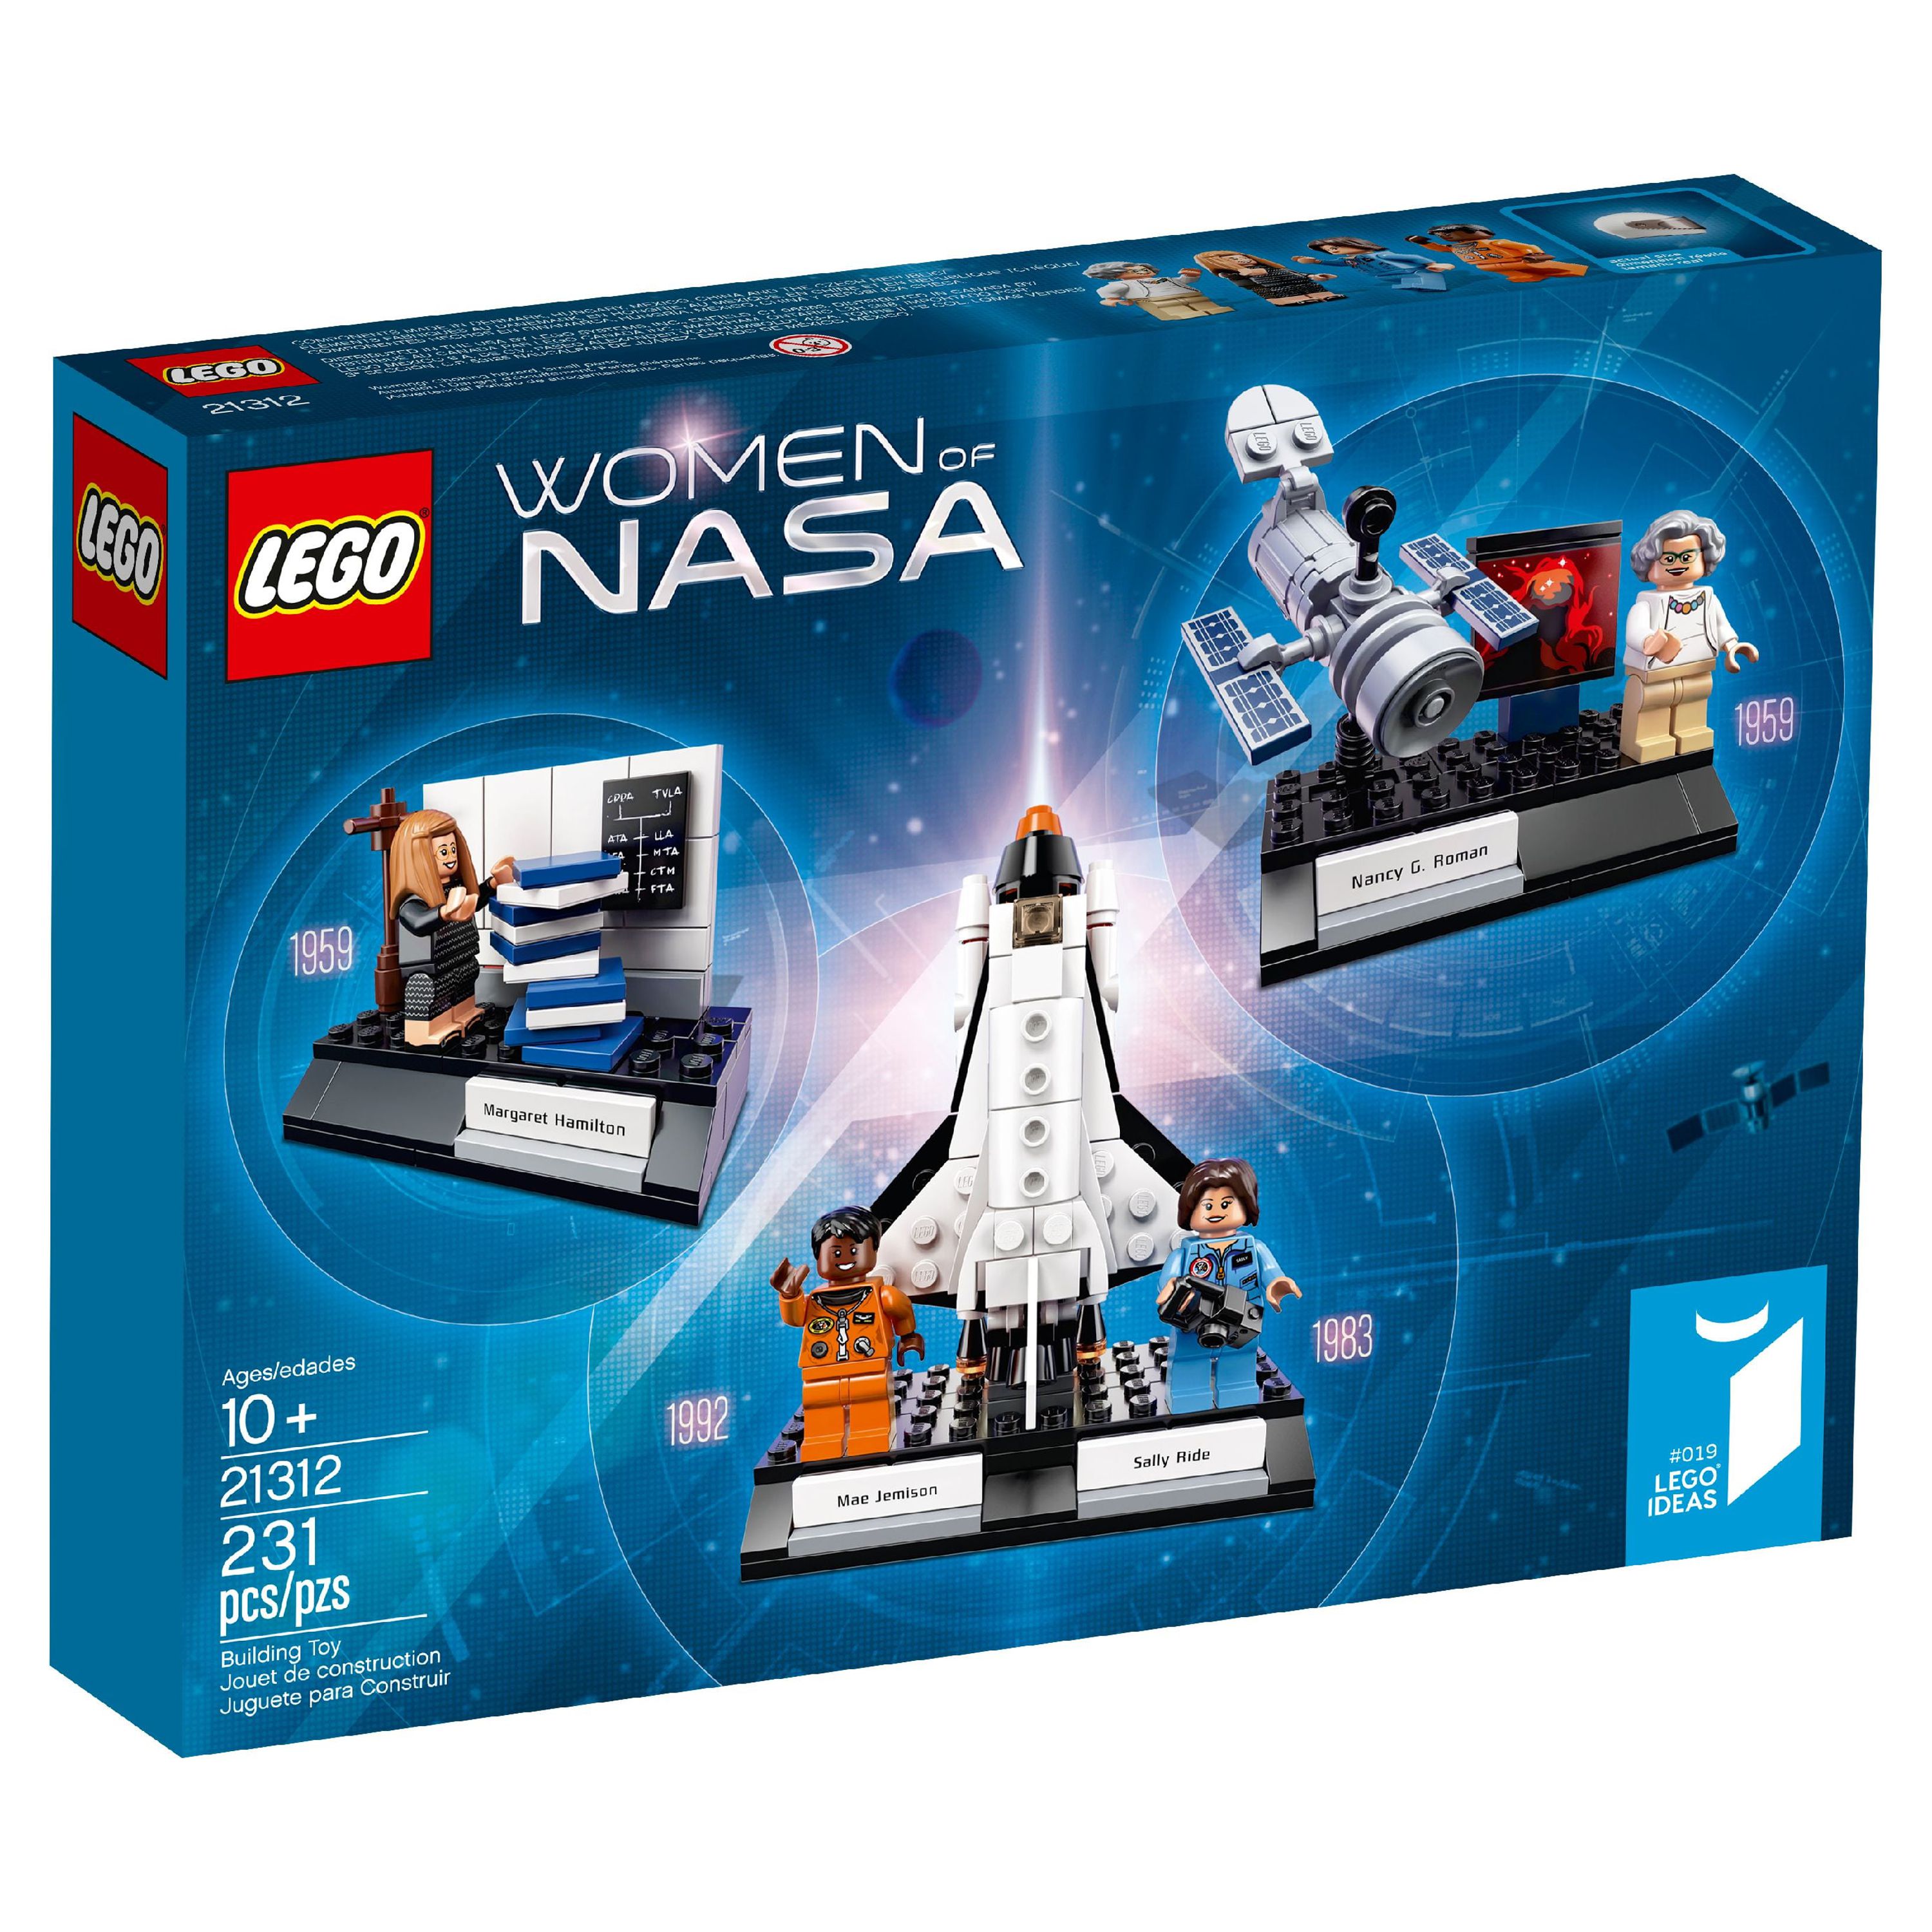 LEGO Ideas Women of NASA Building Set 21312 (231 Pieces) - image 3 of 6